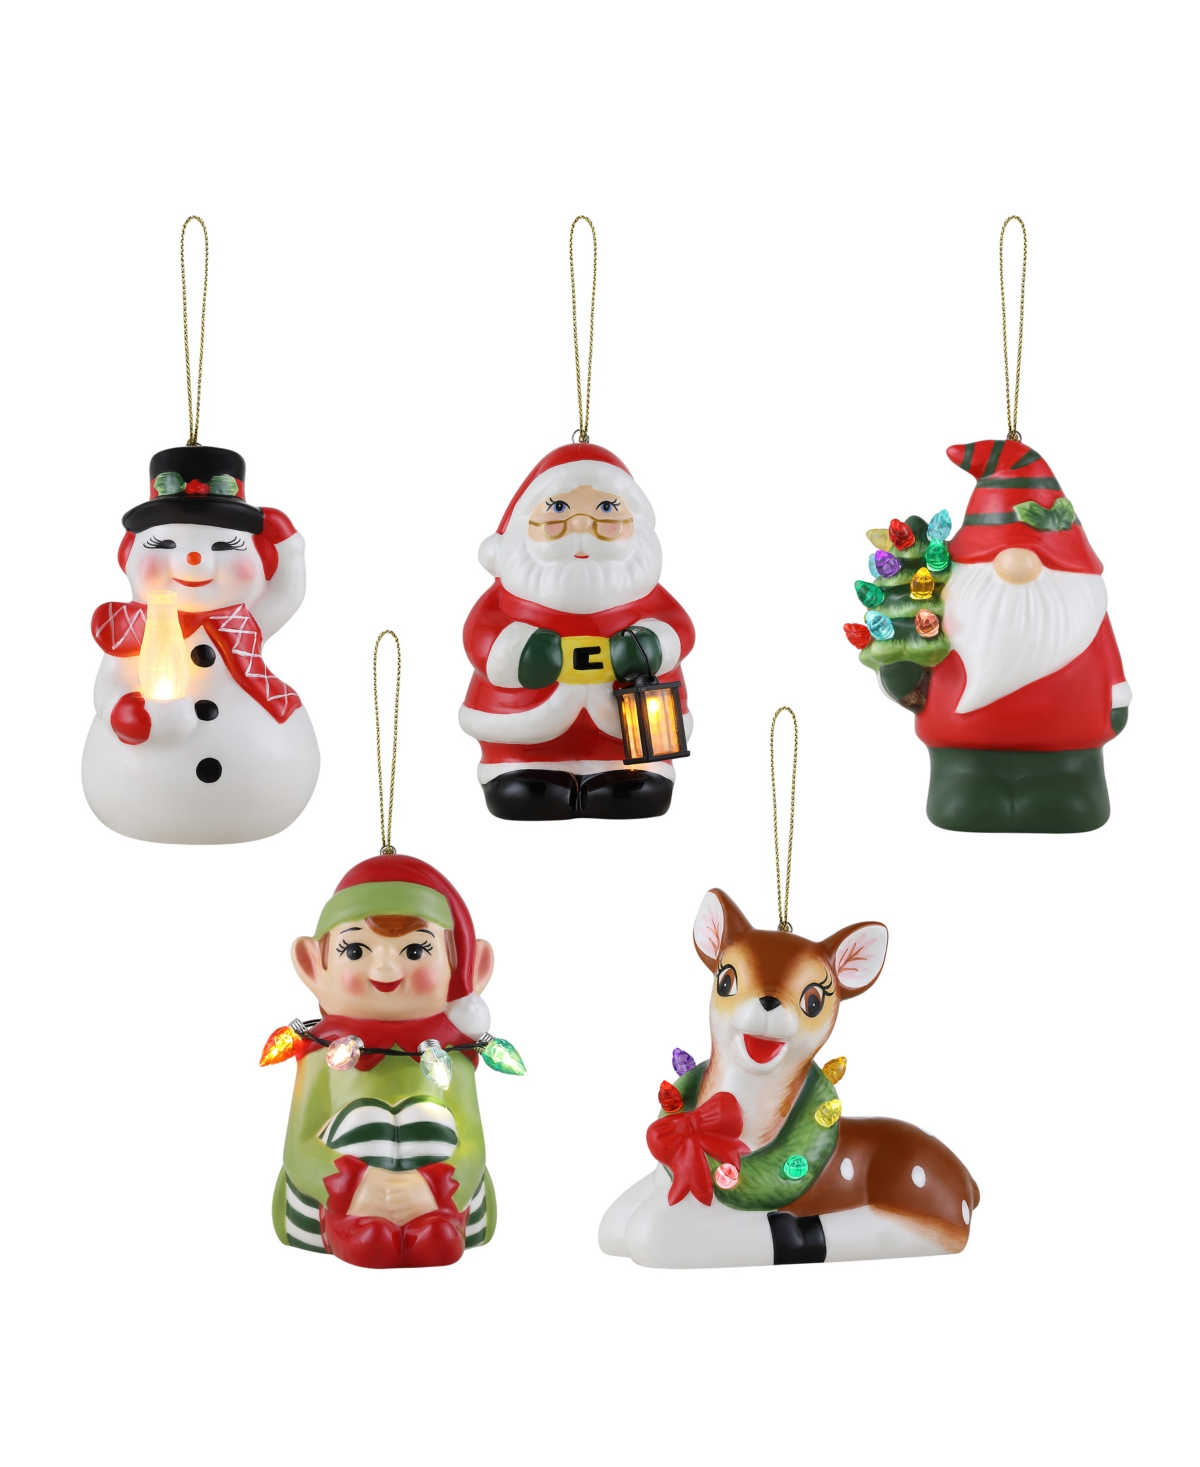 Mr. Christmas 4.5" Ceramic Lit Figurine Ornaments, Set Of 5 In Multi